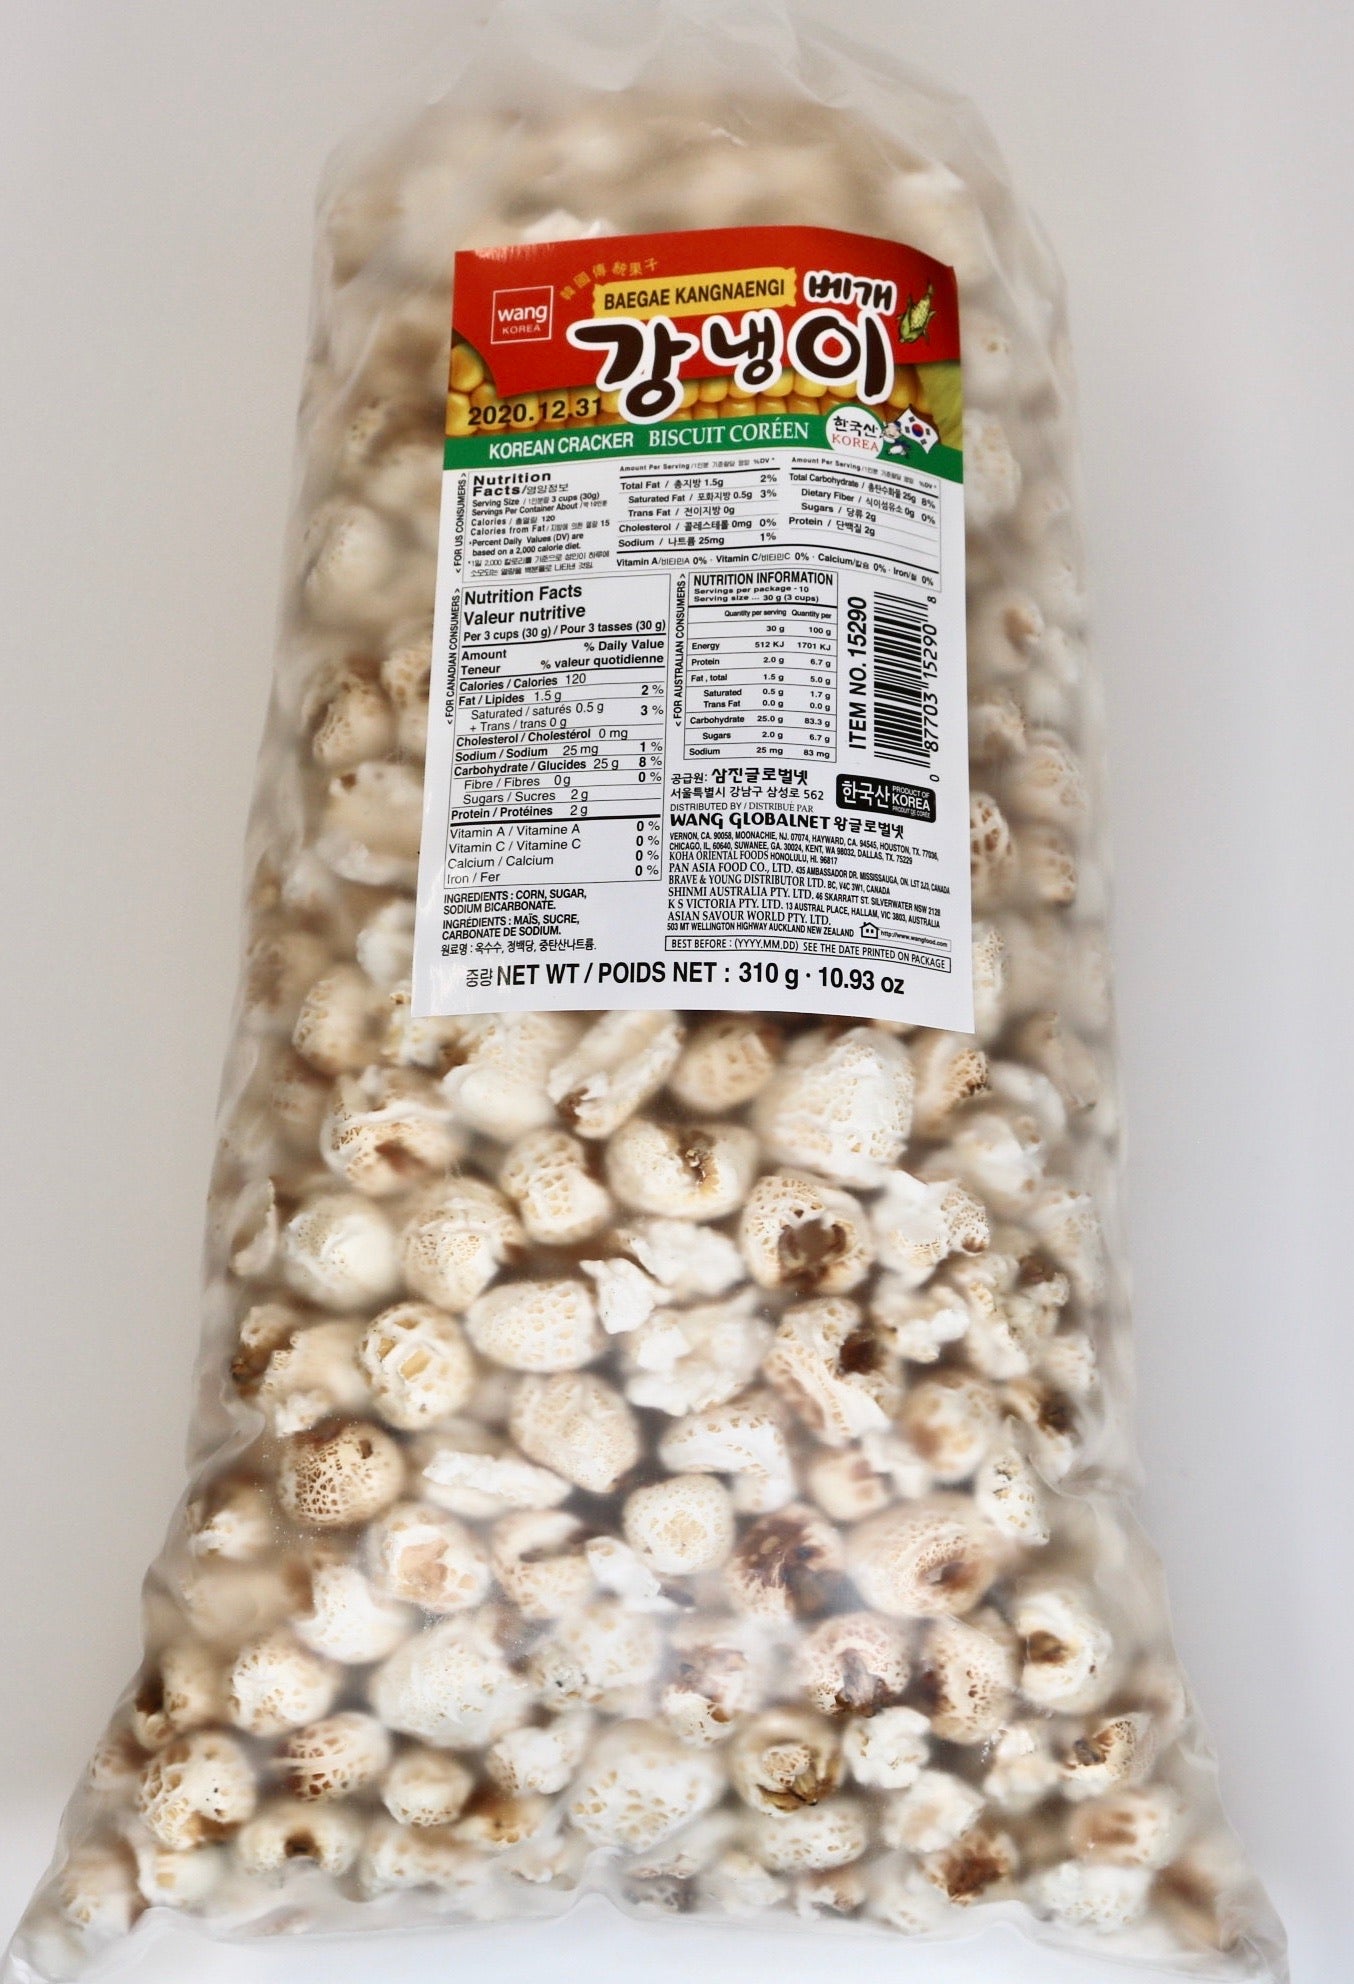 Wang Korea Baegae Kangnaengi Corn Snack - 310g/10.93oz